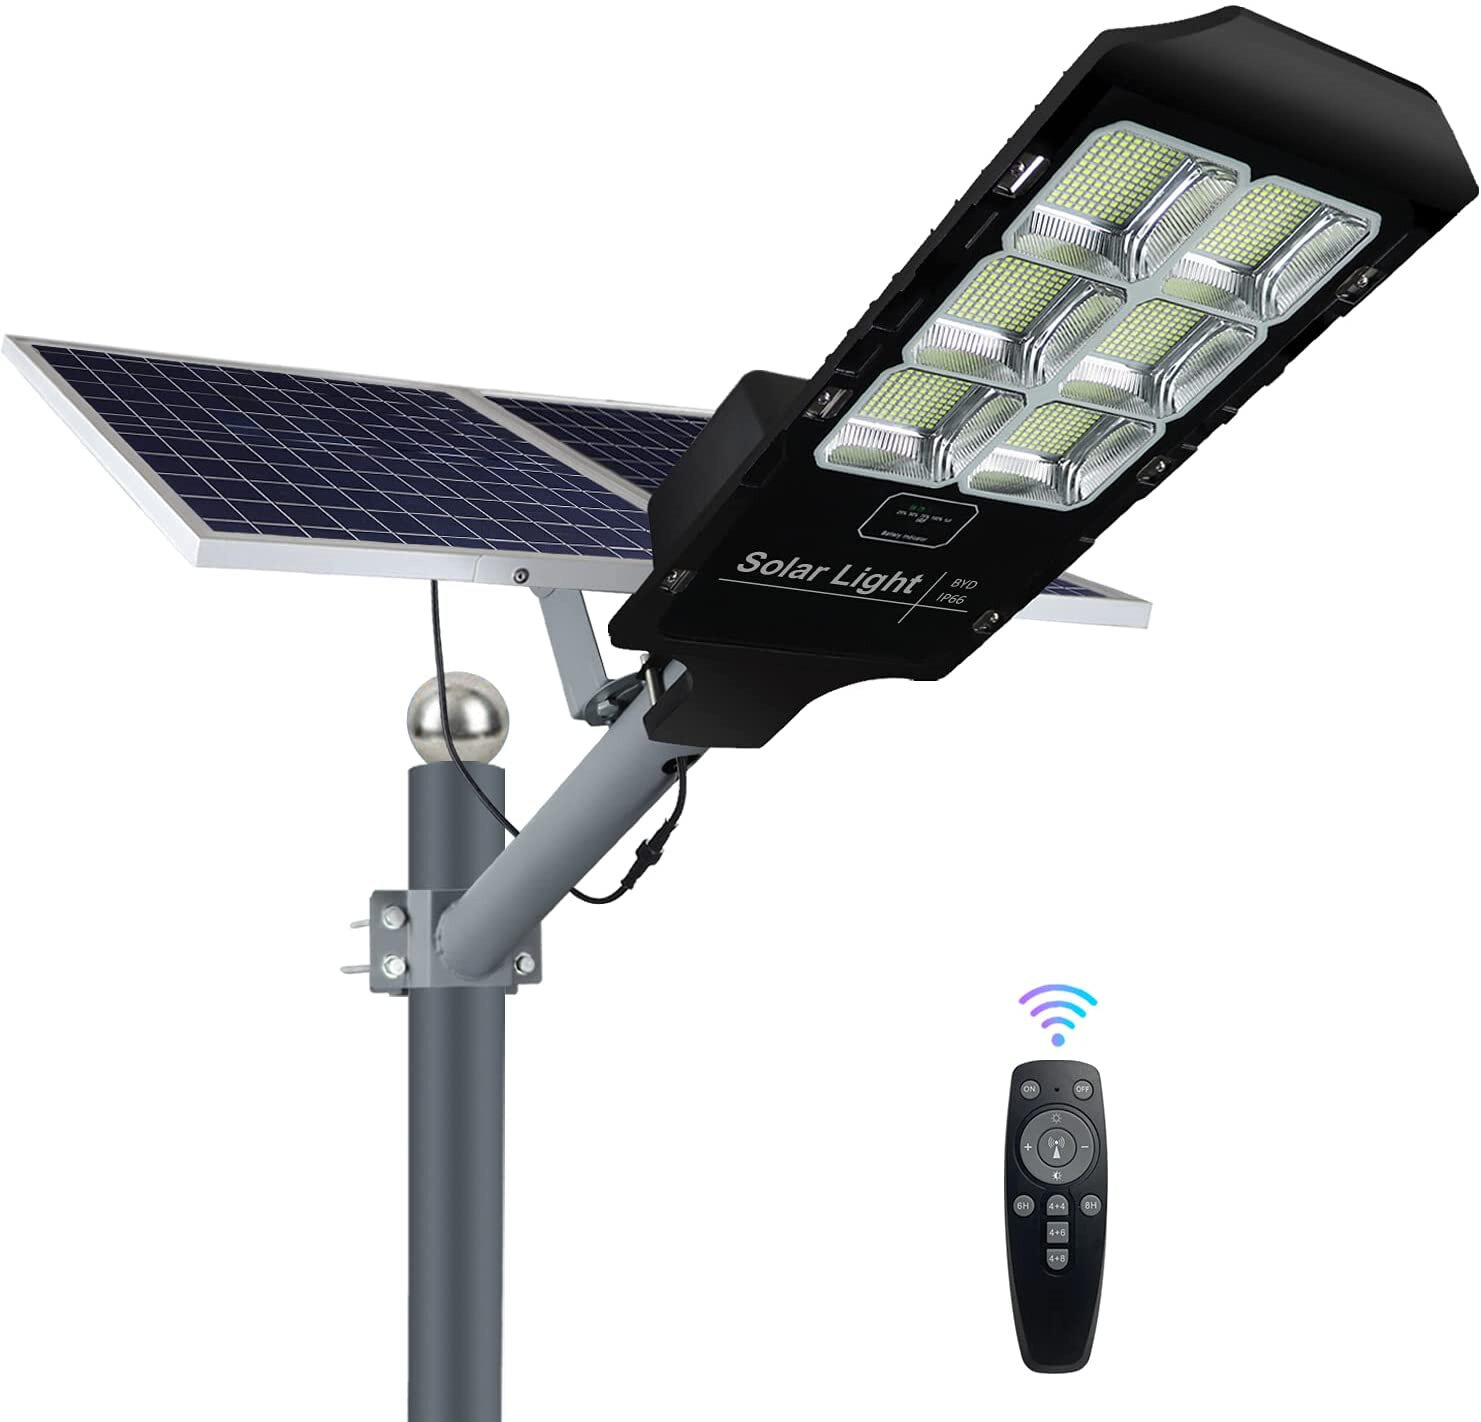 Outdoor solar motion sensor36 LED light solar street lights outdoor dusk to dawn 